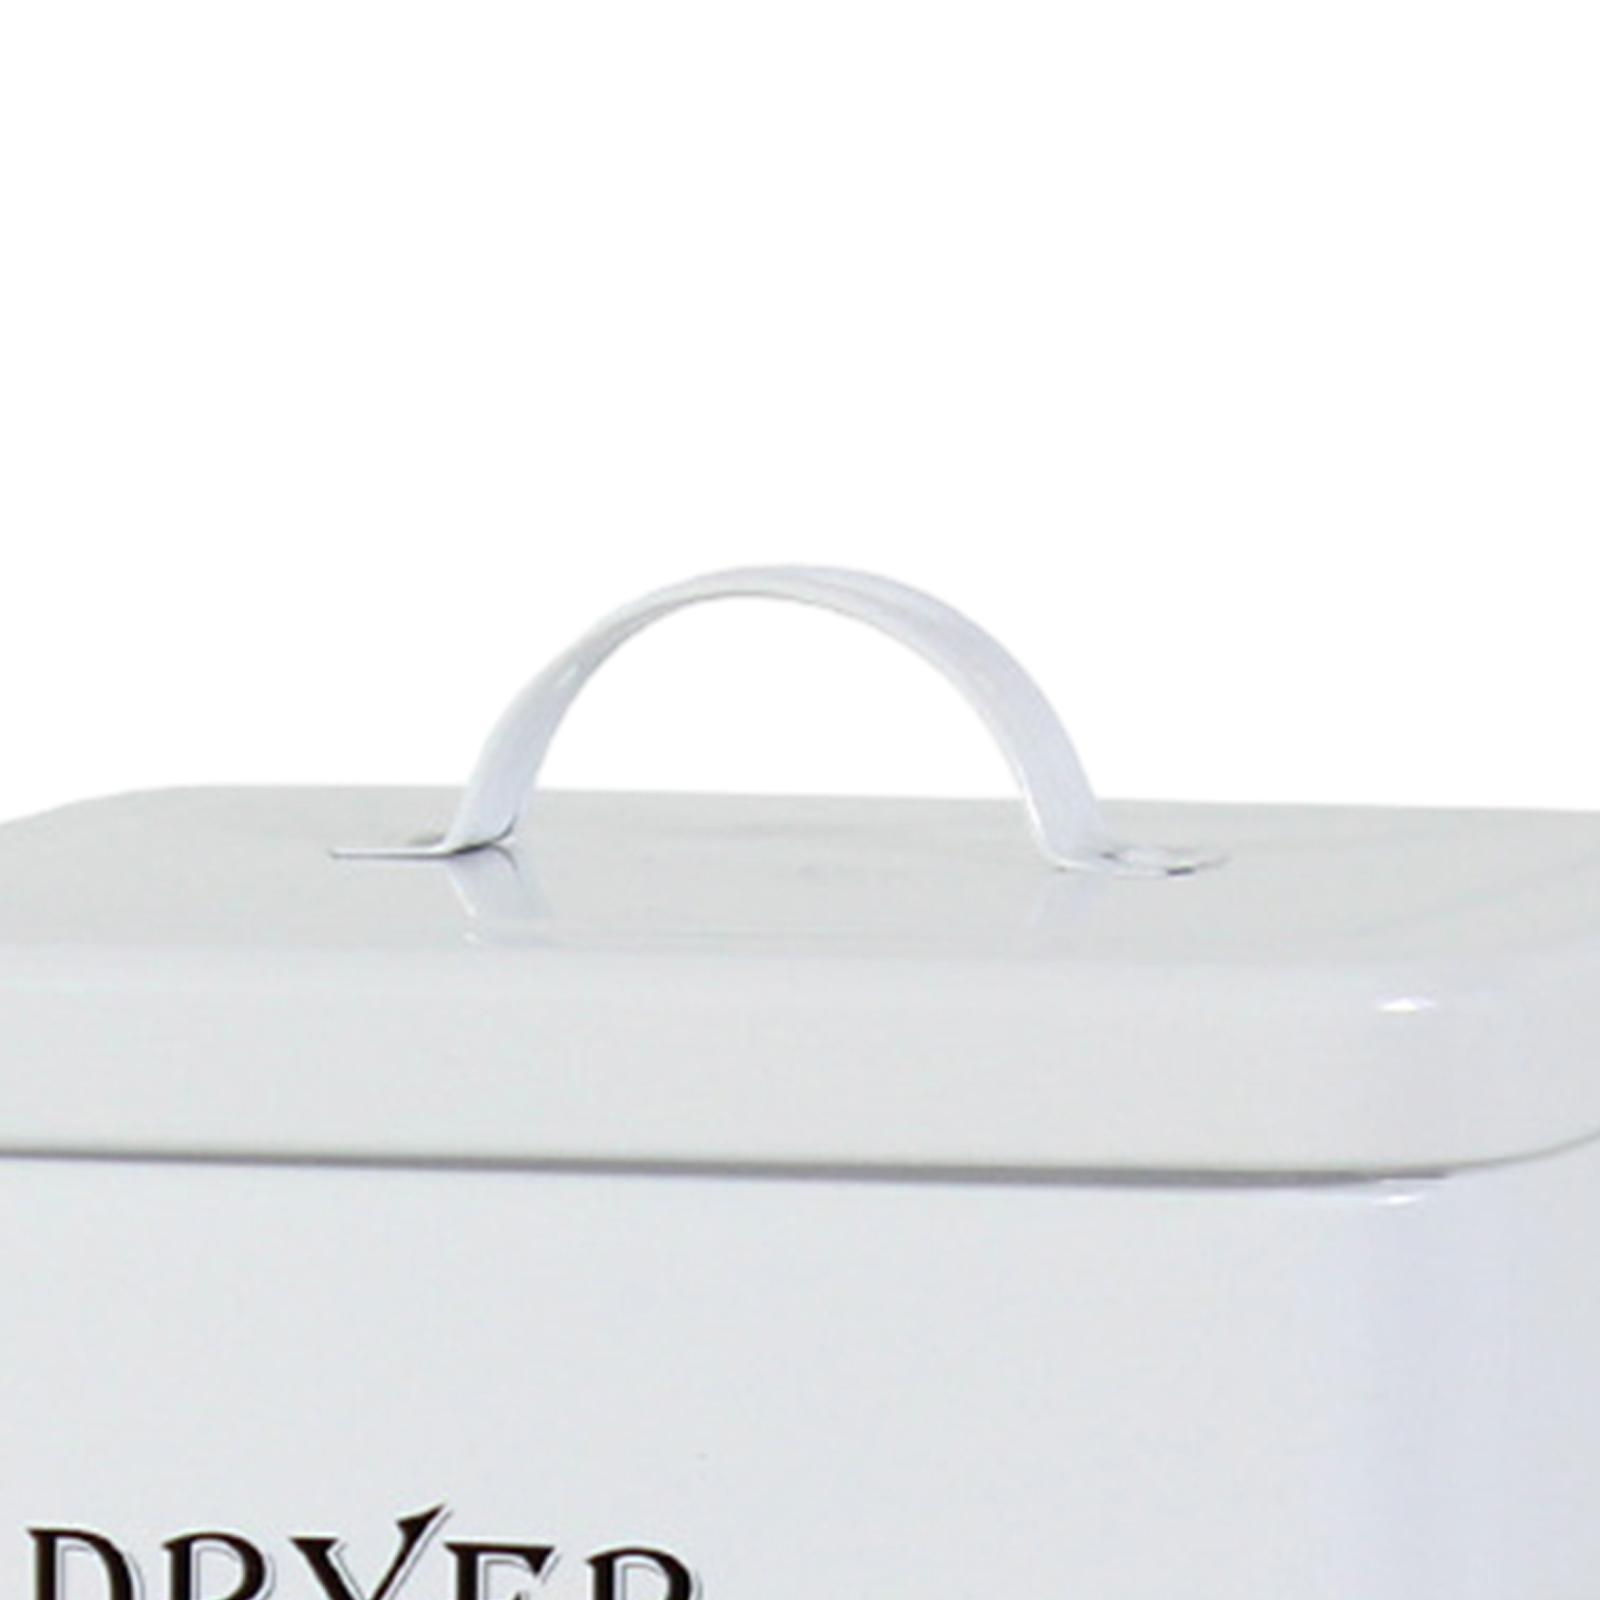 Dryer Sheet Container Dryer Sheet Holder for Home Organization Storage Decor